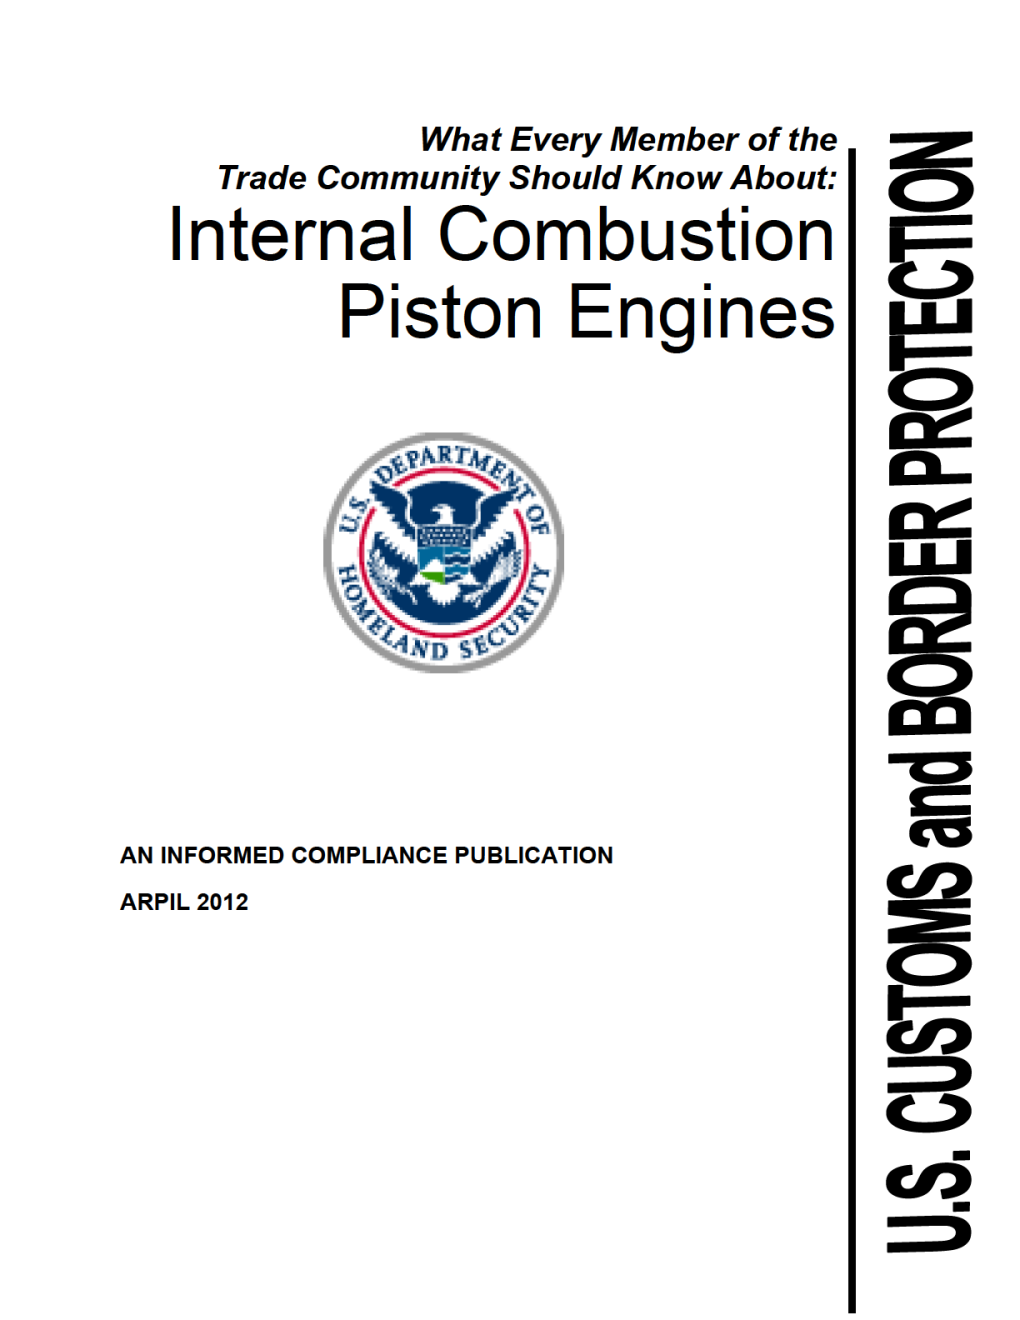 Combustion Piston Engines 2012